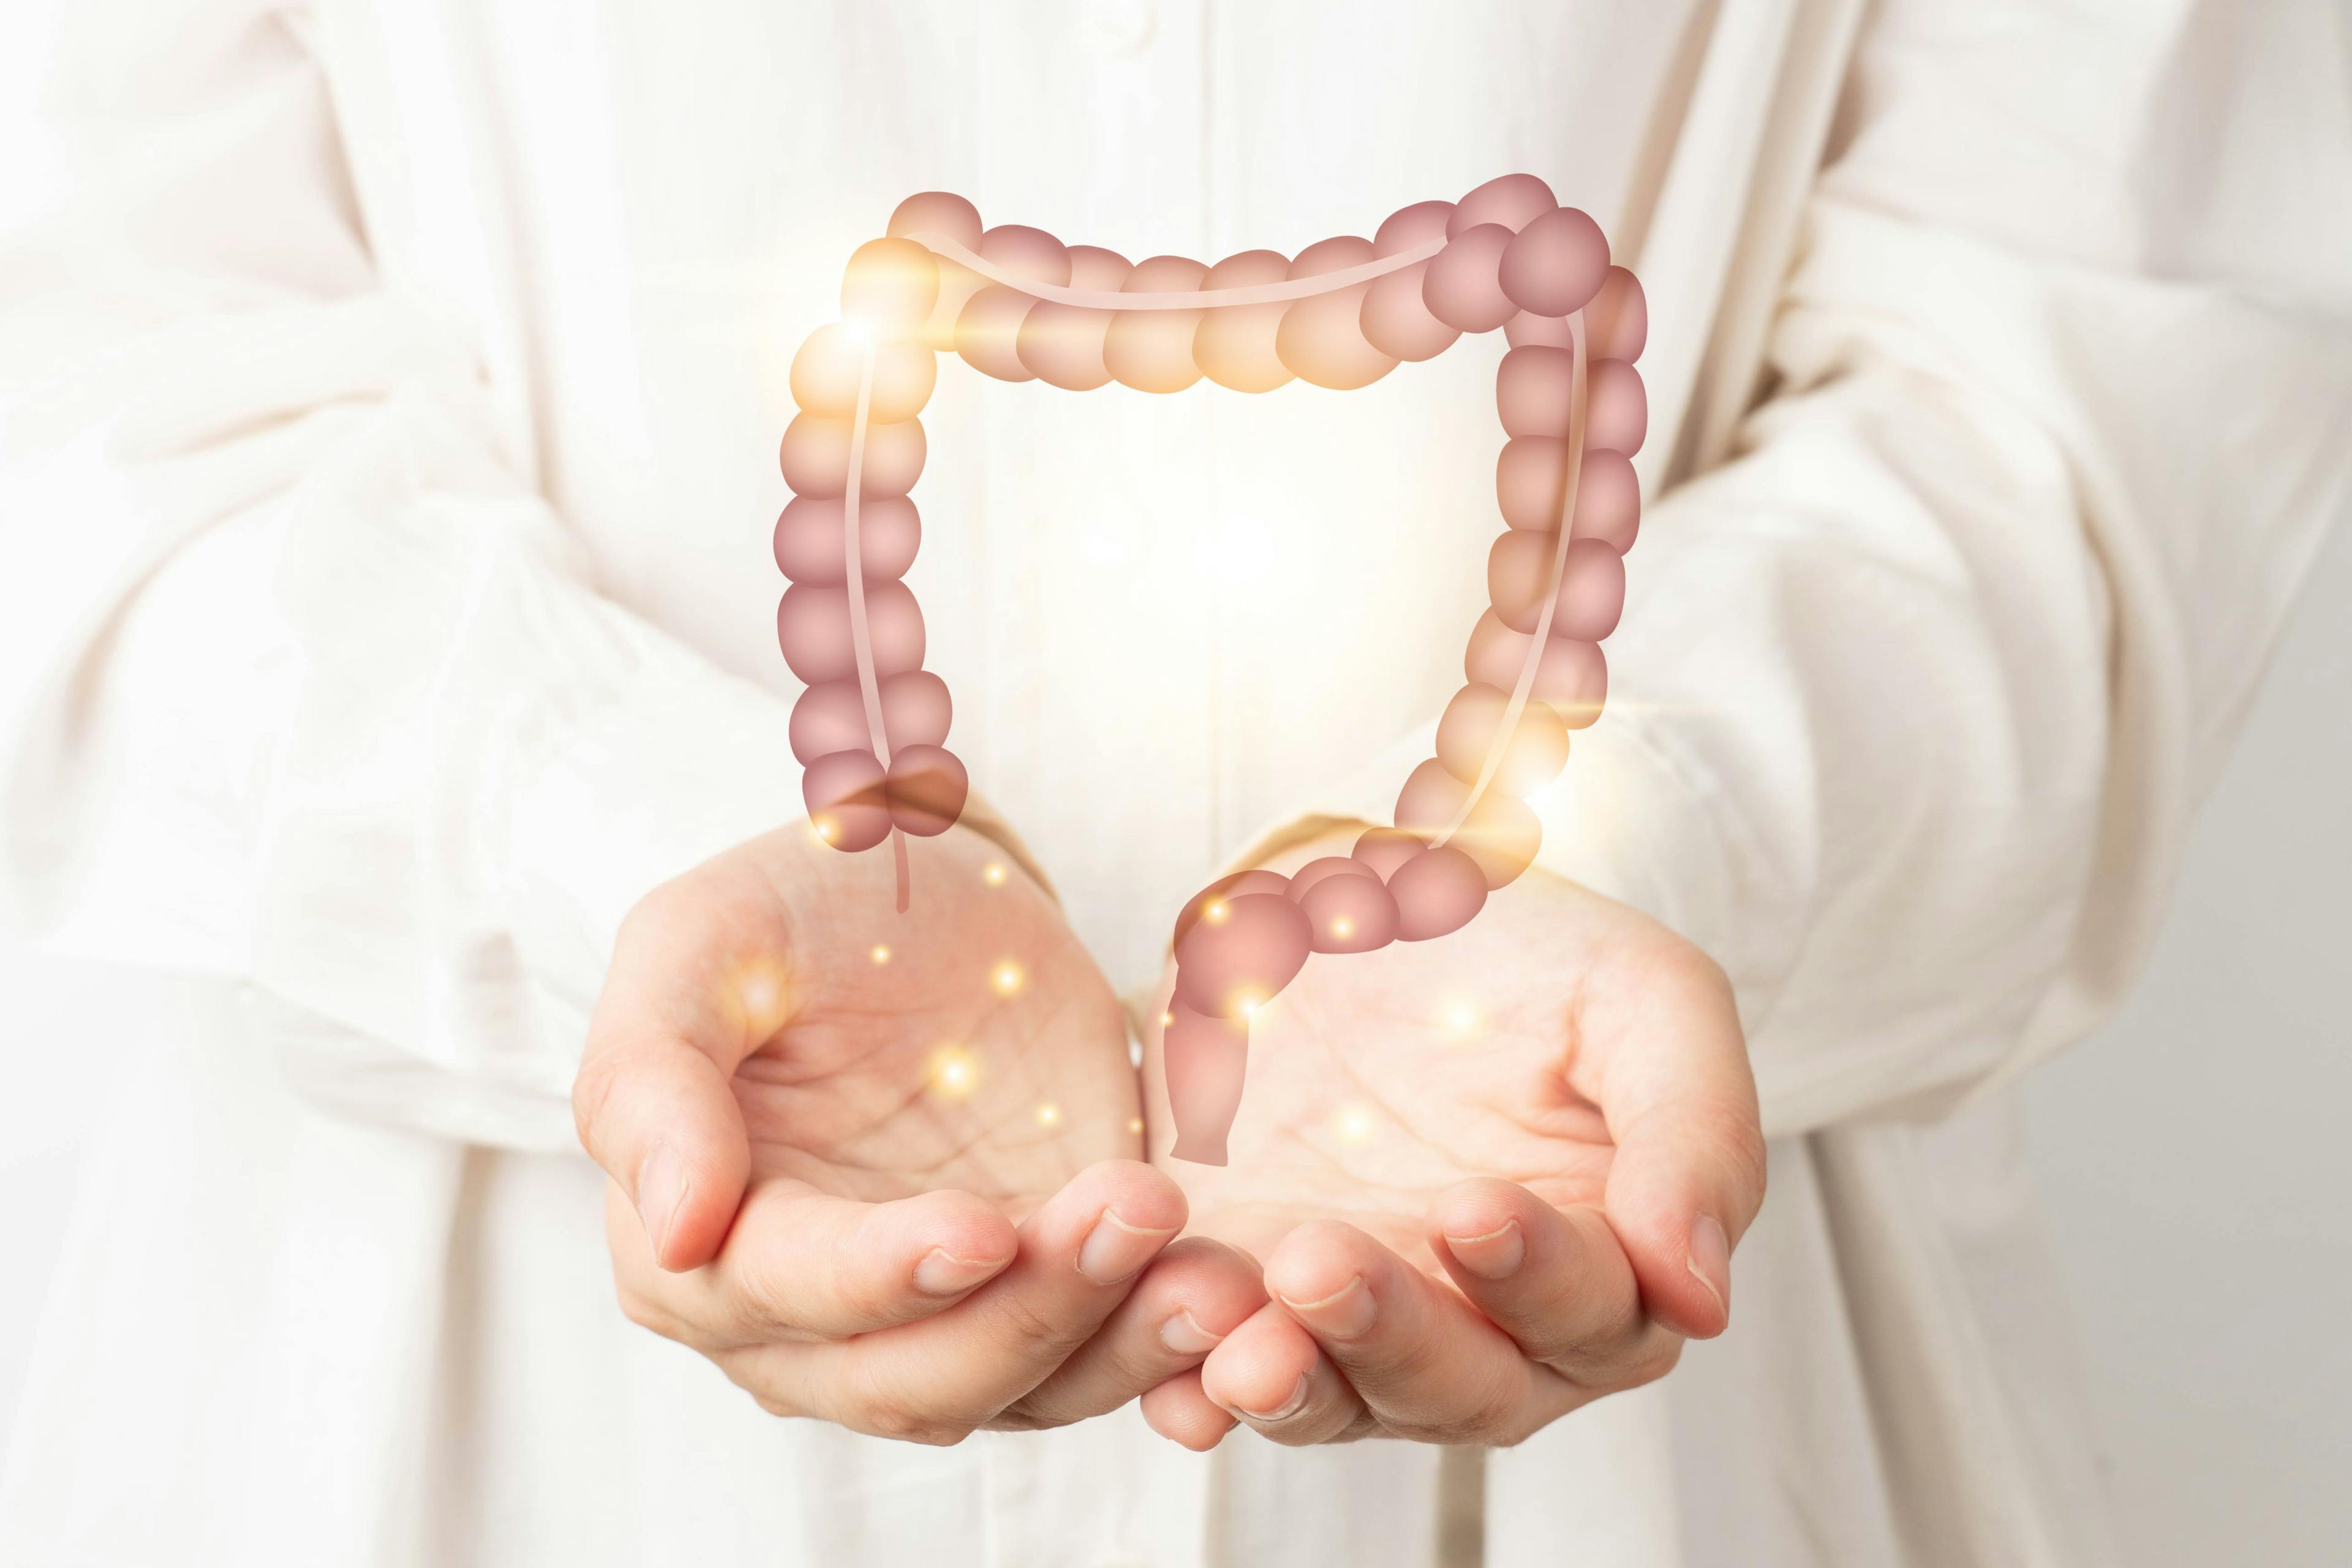 Doctor holding large intestine | Image credit: Orawan - stock.adobe.com